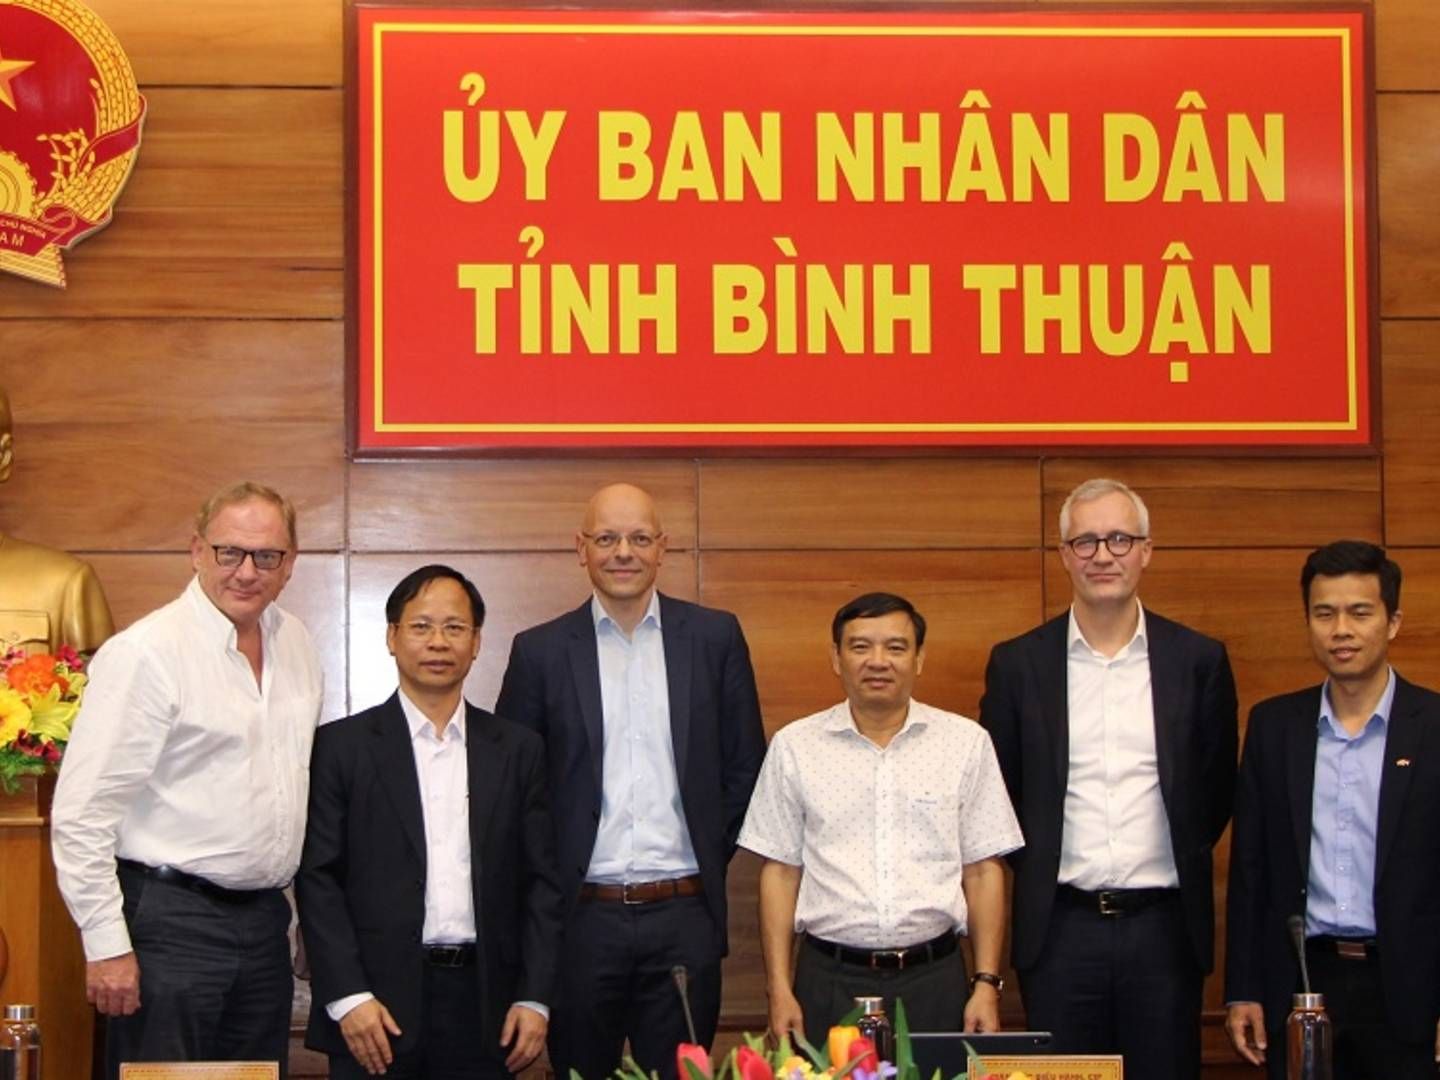 Copenhagen Infrastructure Partners recently opened an office in Vietnam. | Photo: Tinh Binh Thuan